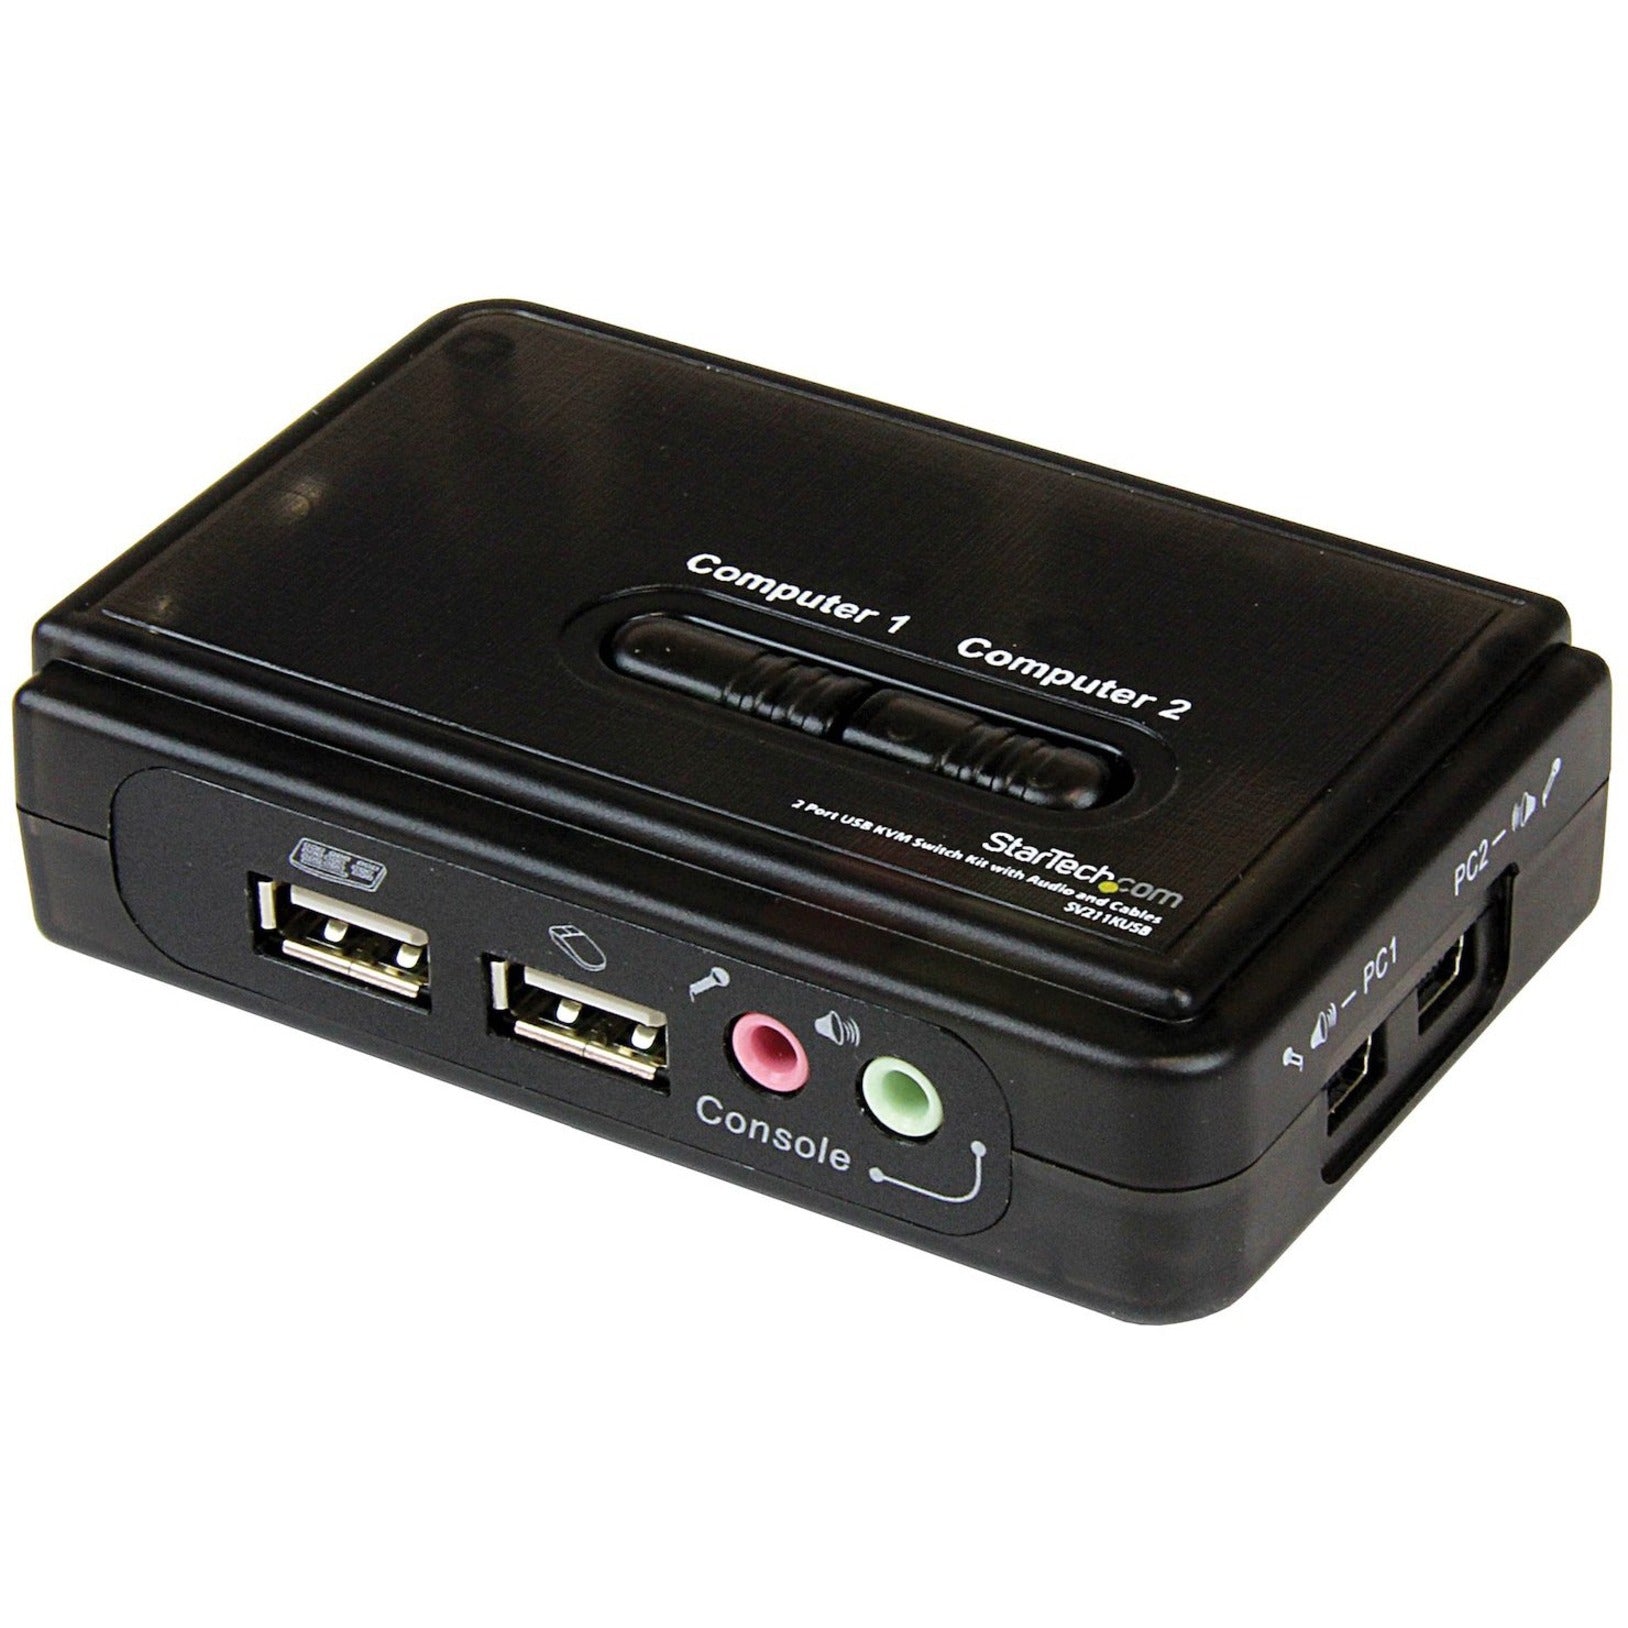 StarTech.com SV211KUSB 2 Port USB KVM Kit with Audio Switching, Easy Computer Control